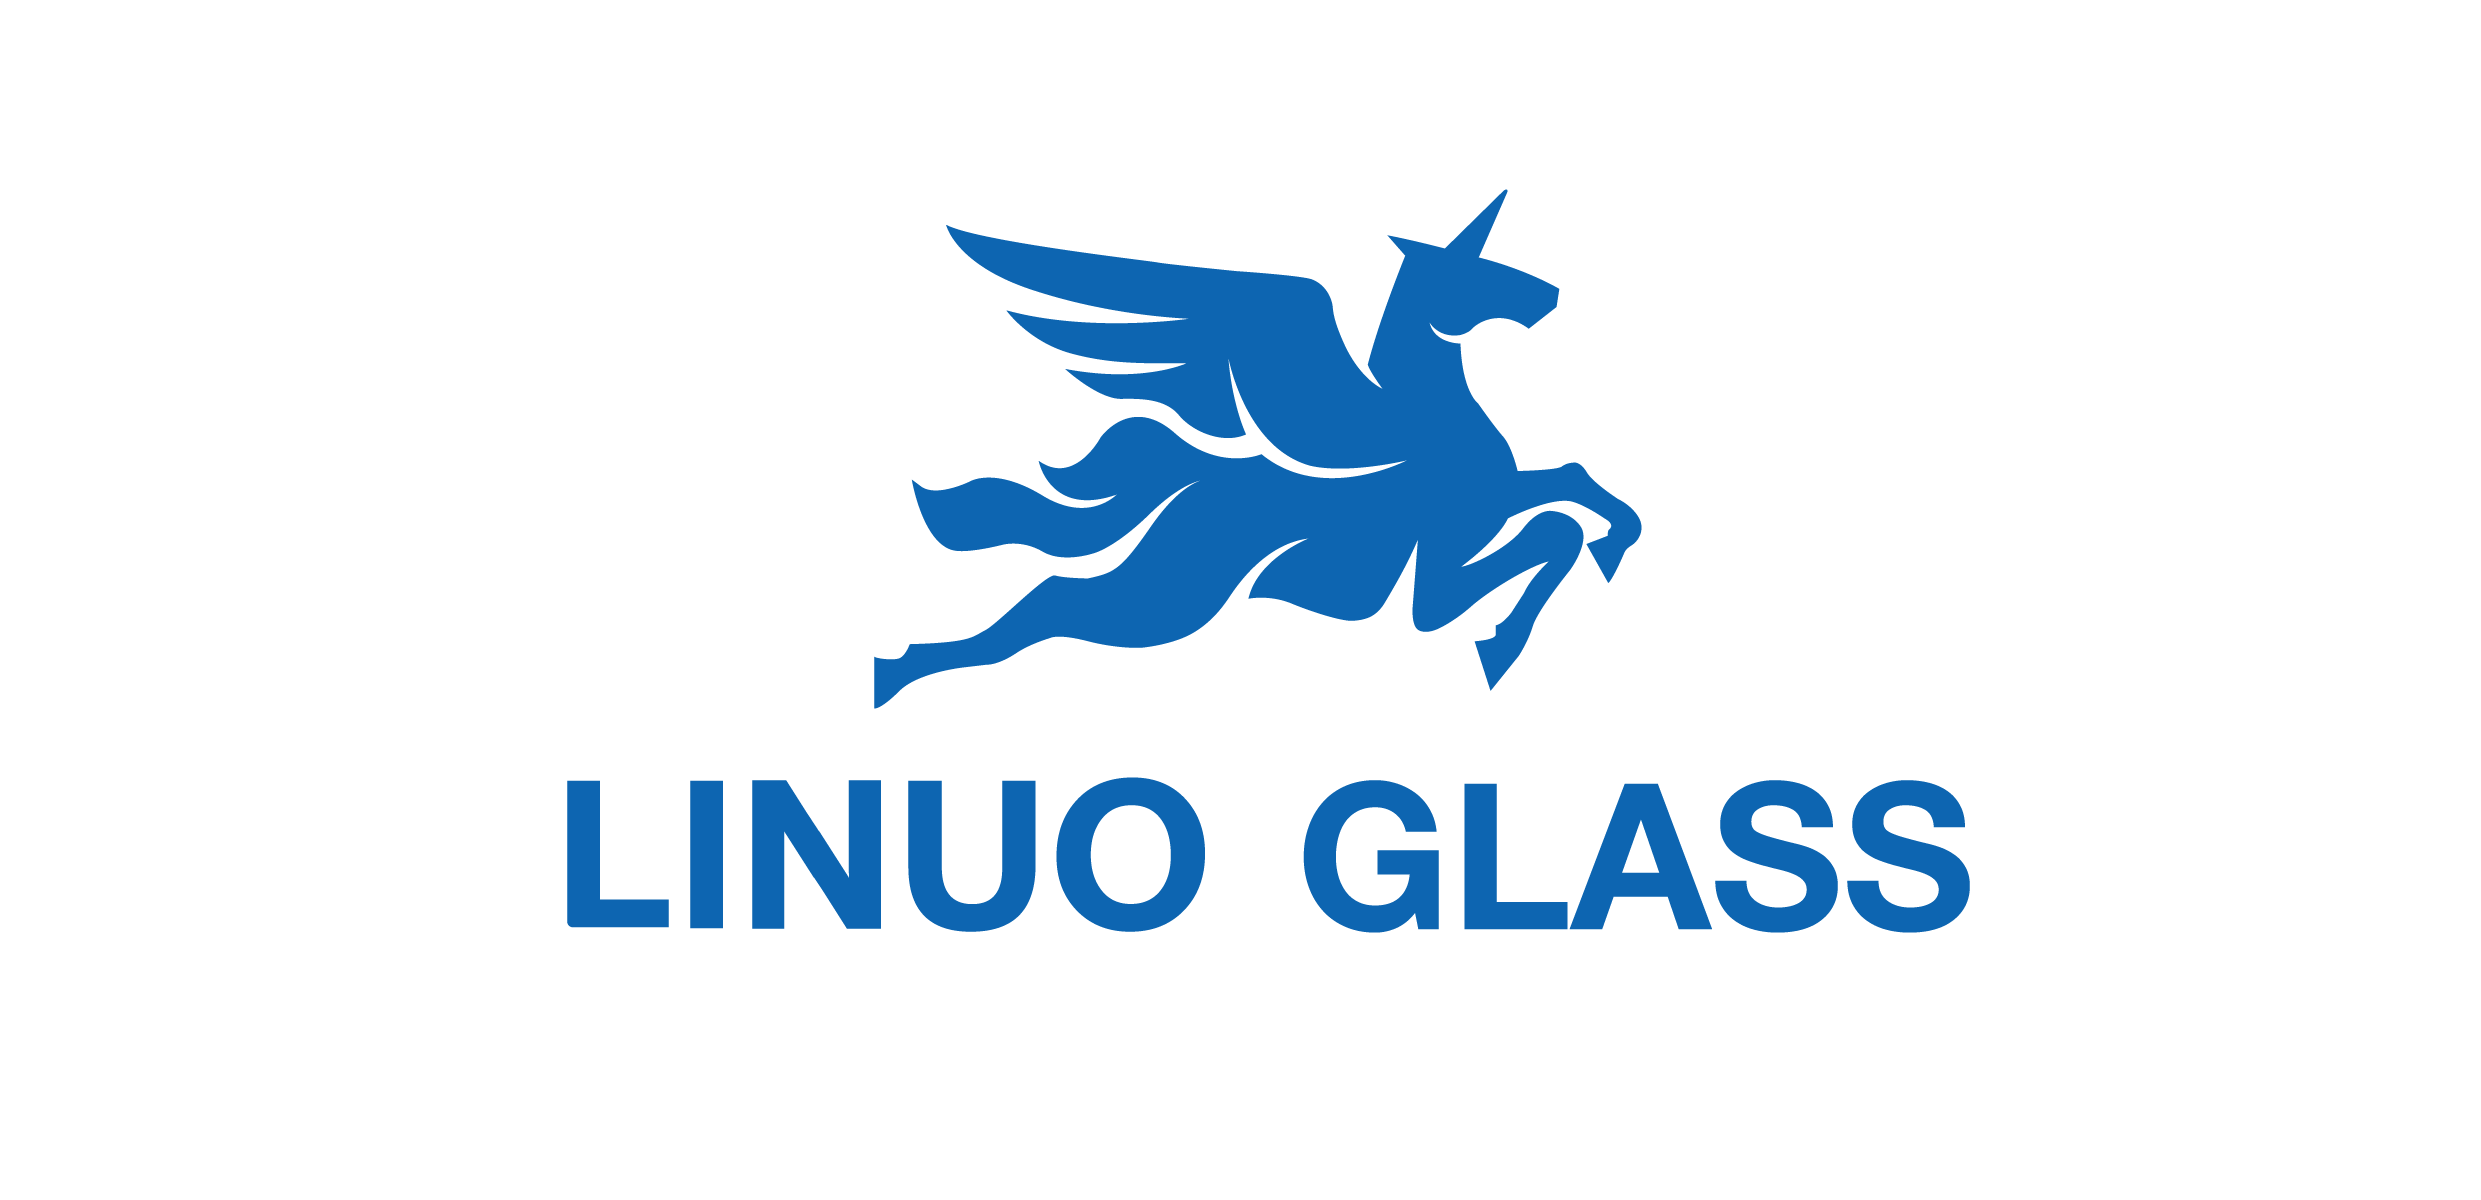 Linuo Glass: 세계 최대의 고붕규산 내열유리 생산업체입니다.